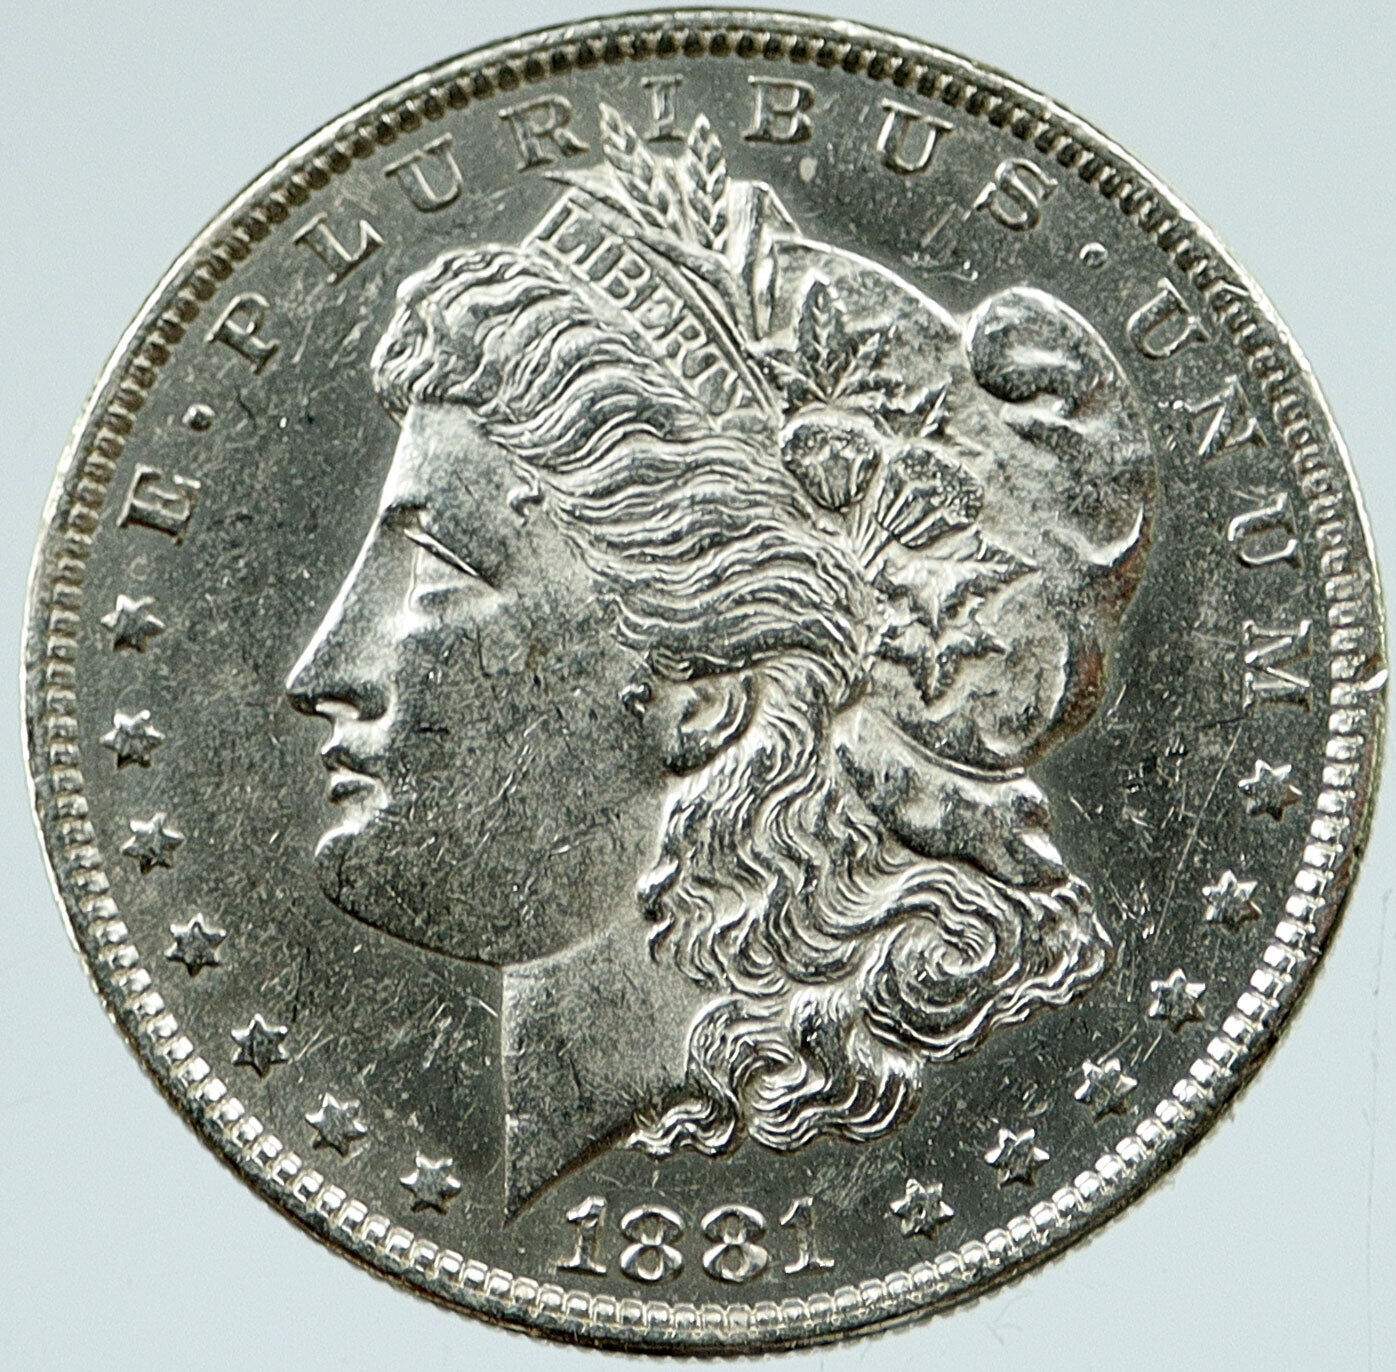 1881 O UNITED STATES of America SILVER Morgan Old US Dollar Coin EAGLE i117108